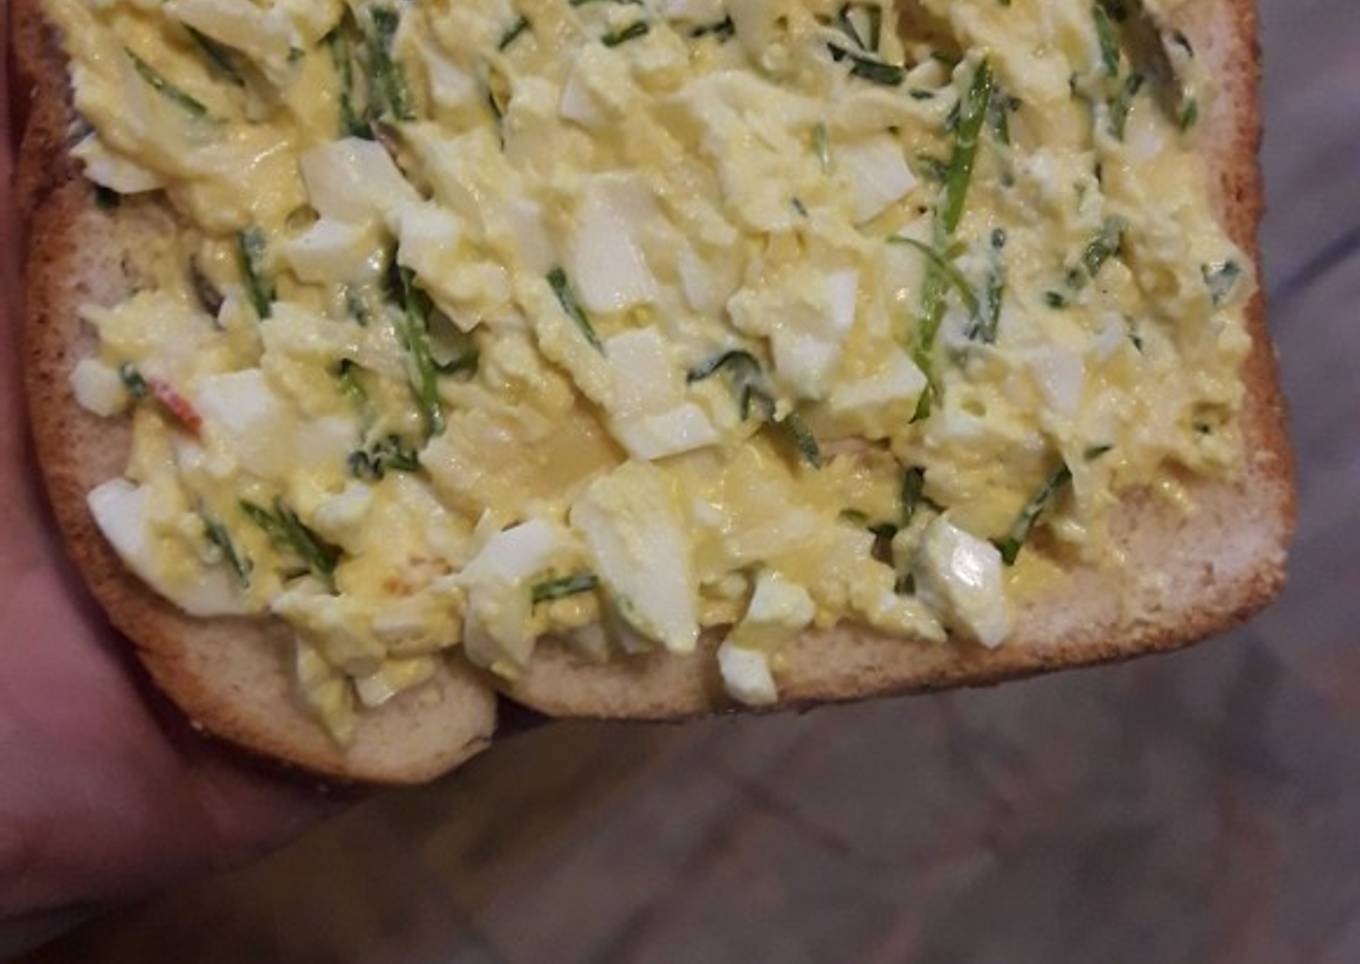 Imitation of eggs canape- deviled eggs on bread